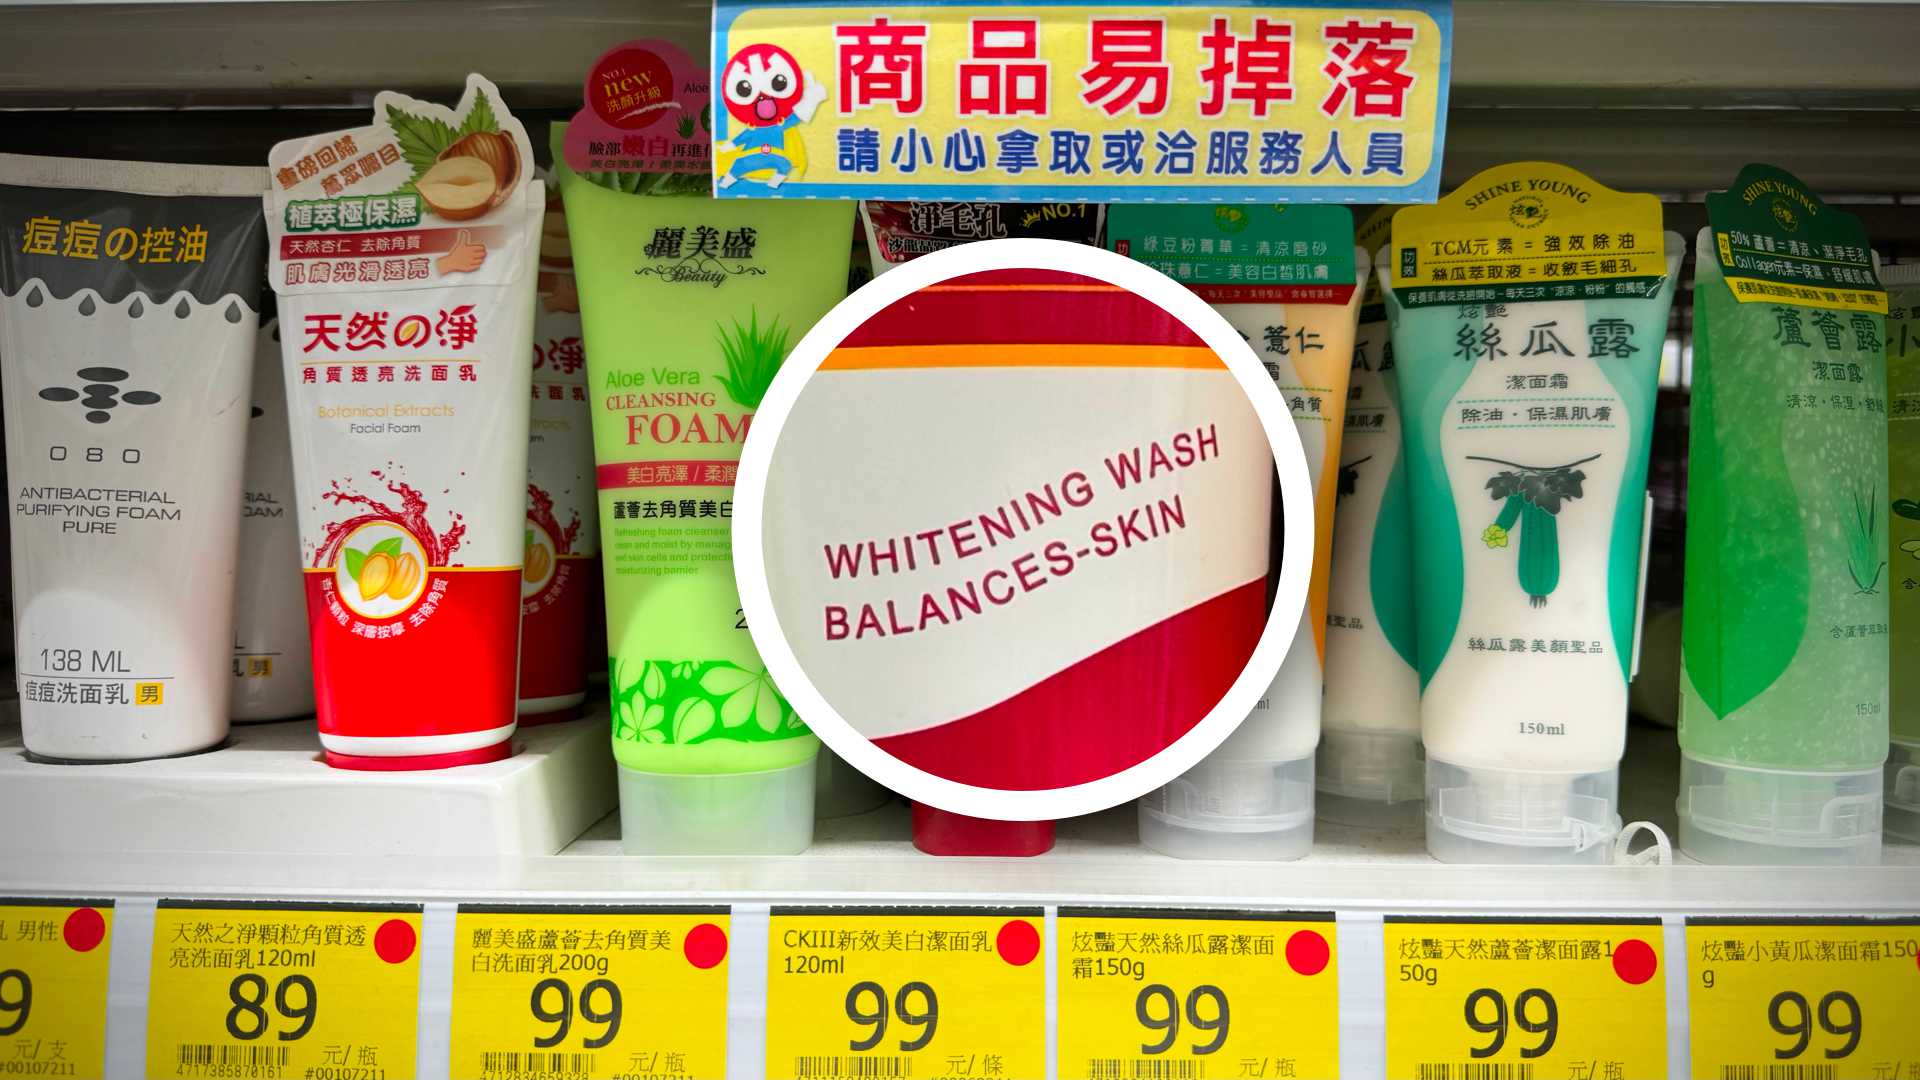 Close-up of a label that promotes Whitening Wash Balances Skin.